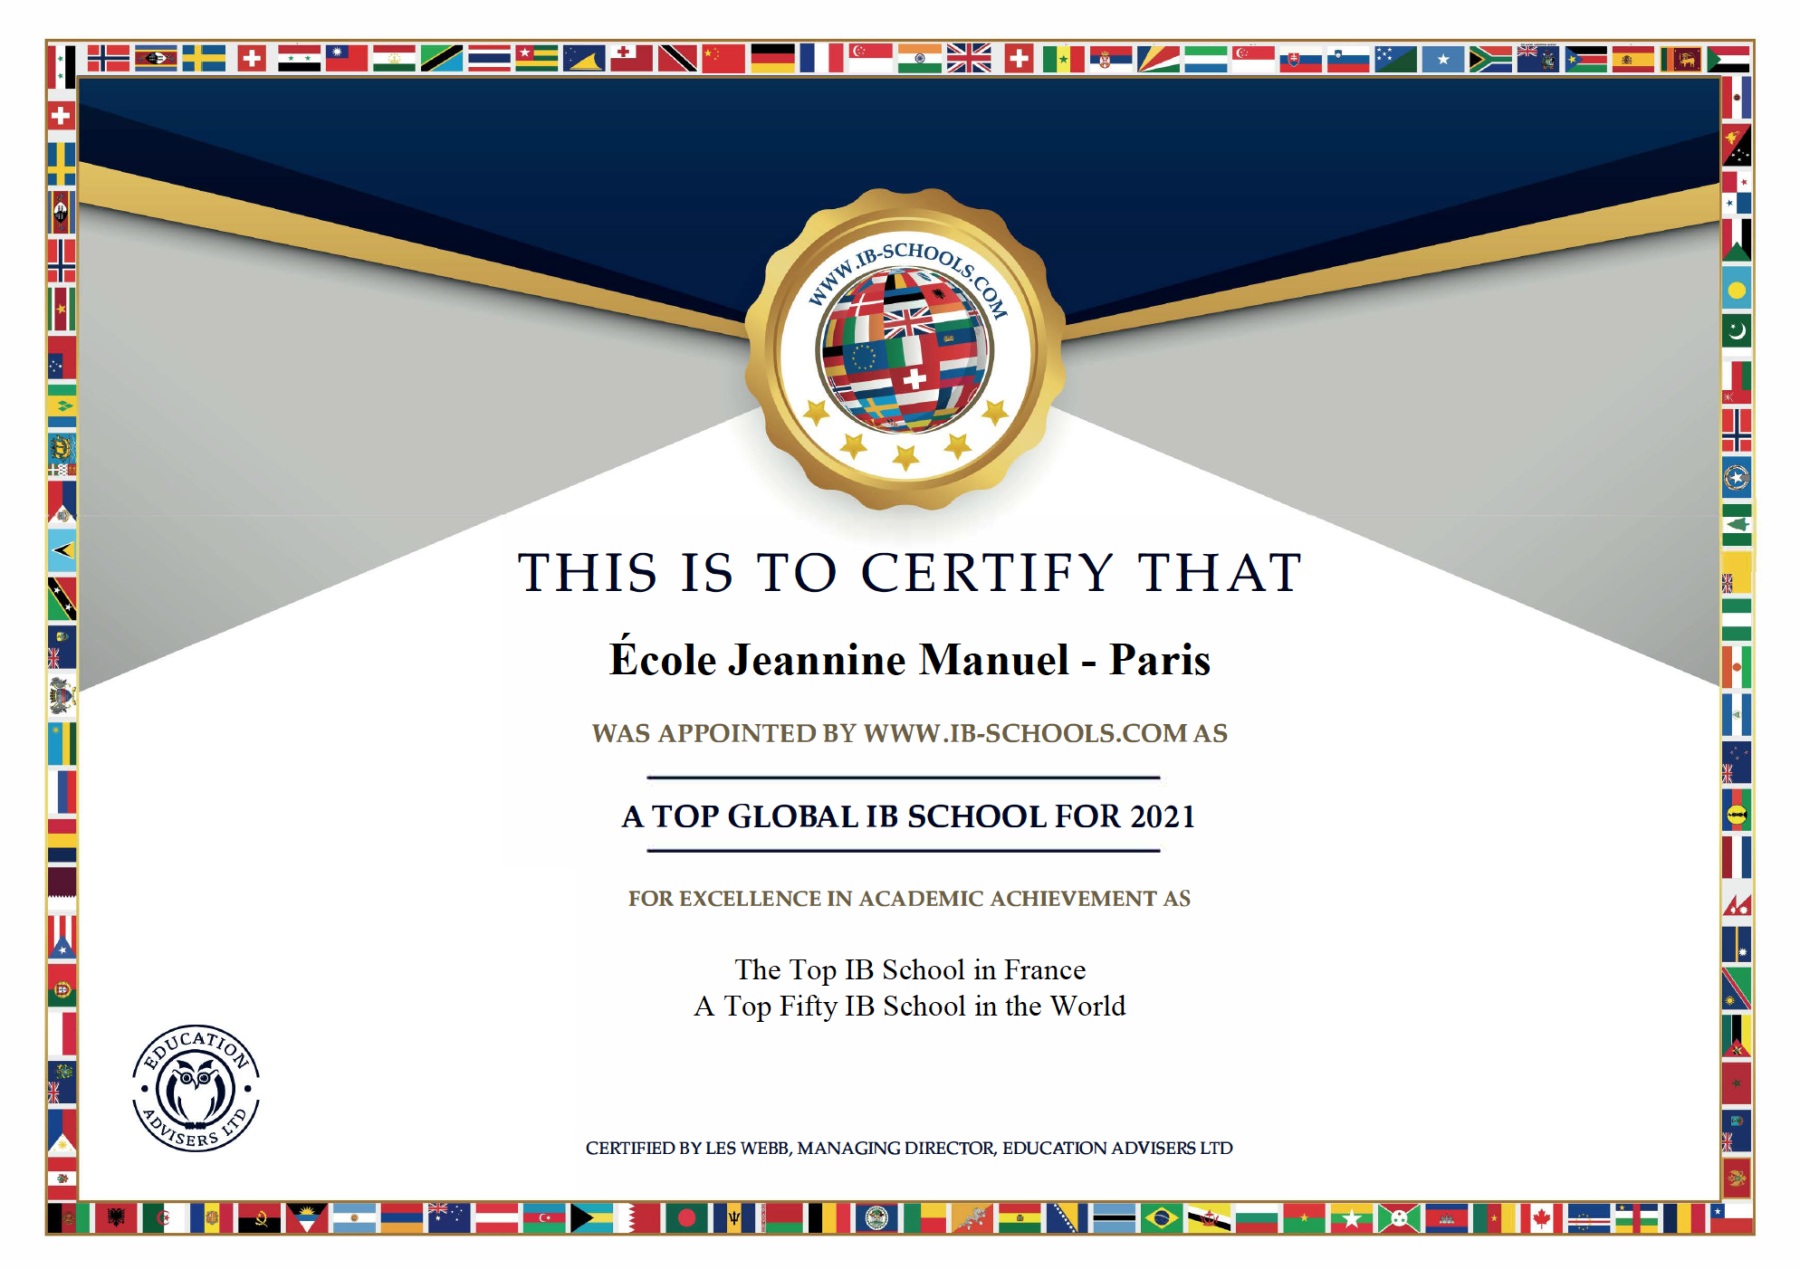 Certificate for École Jeannine Manuel Top IB School in France 2021